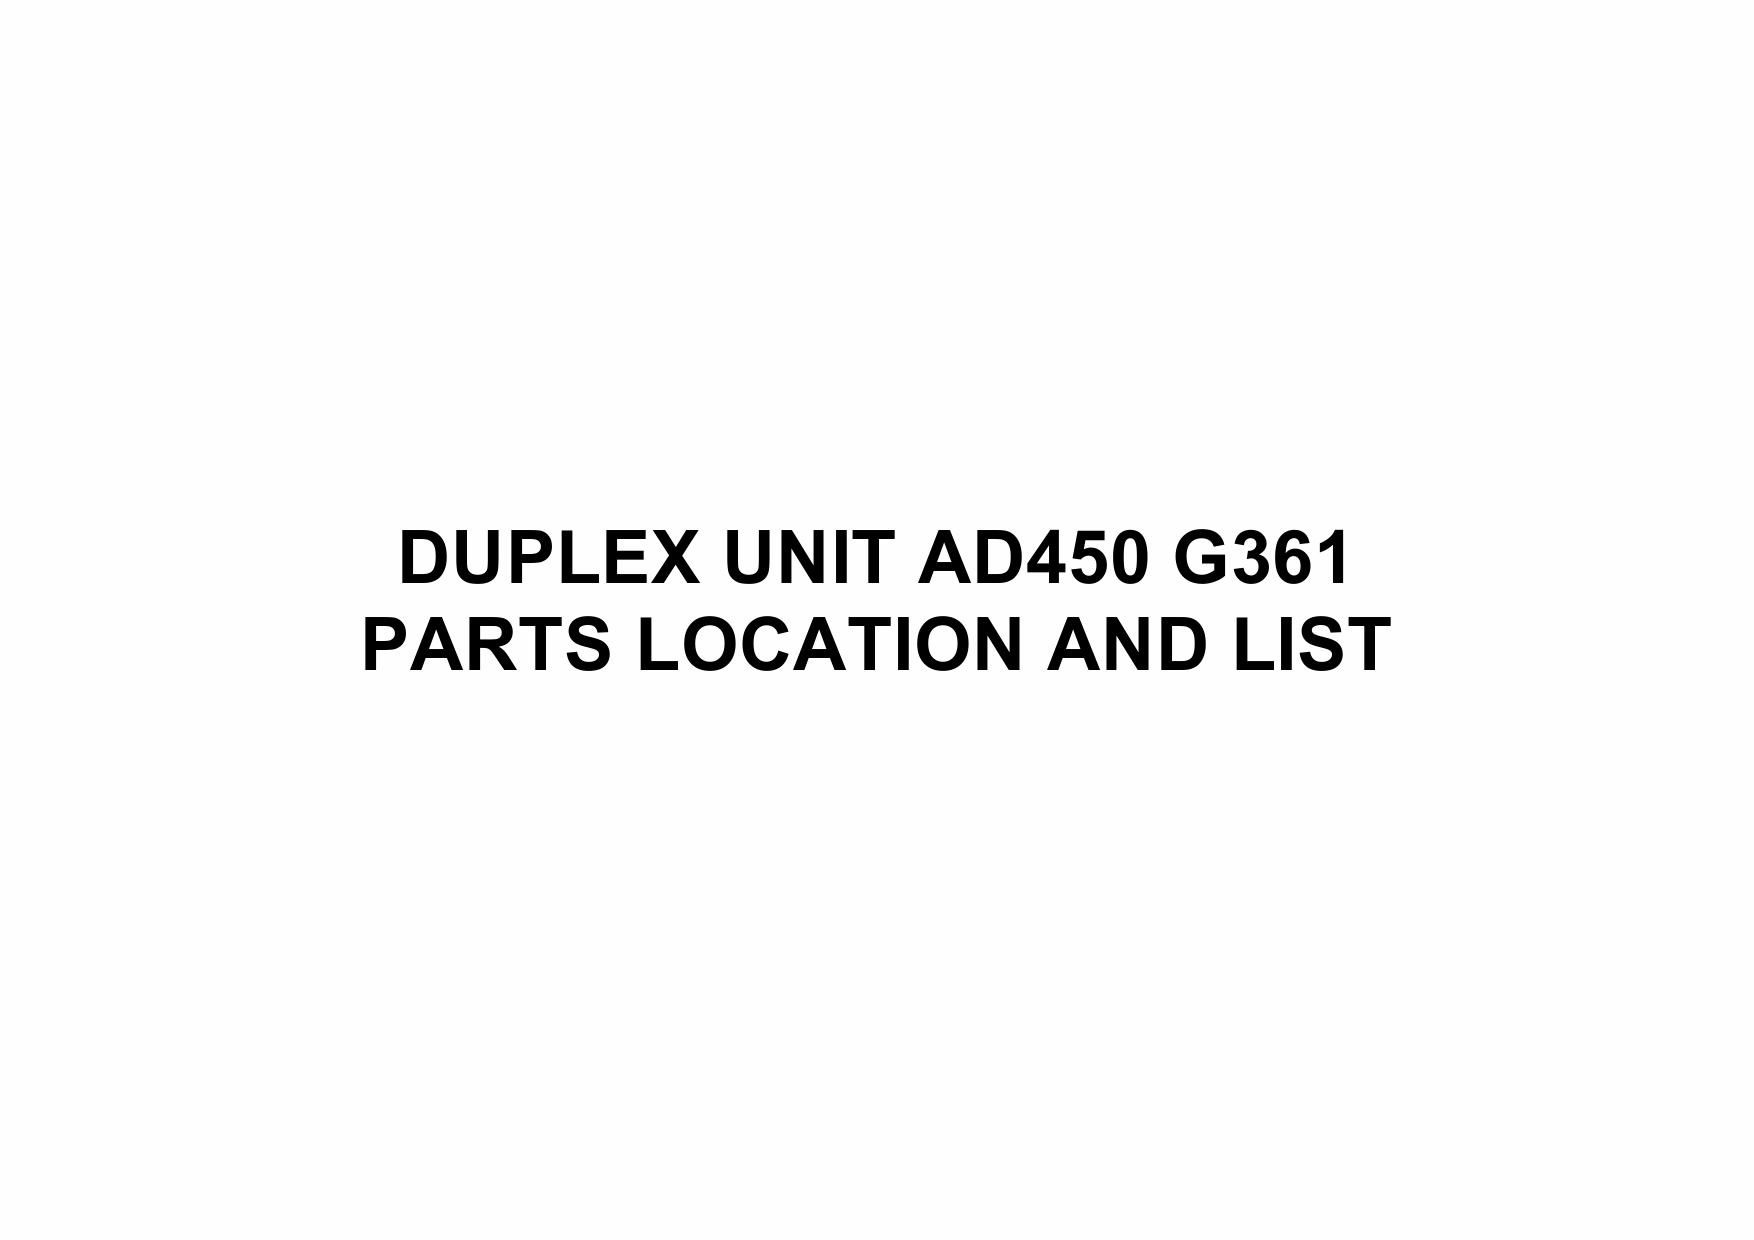 RICOH Options G361 DUPLEX-UNIT-AD450 Parts Catalog PDF download-1